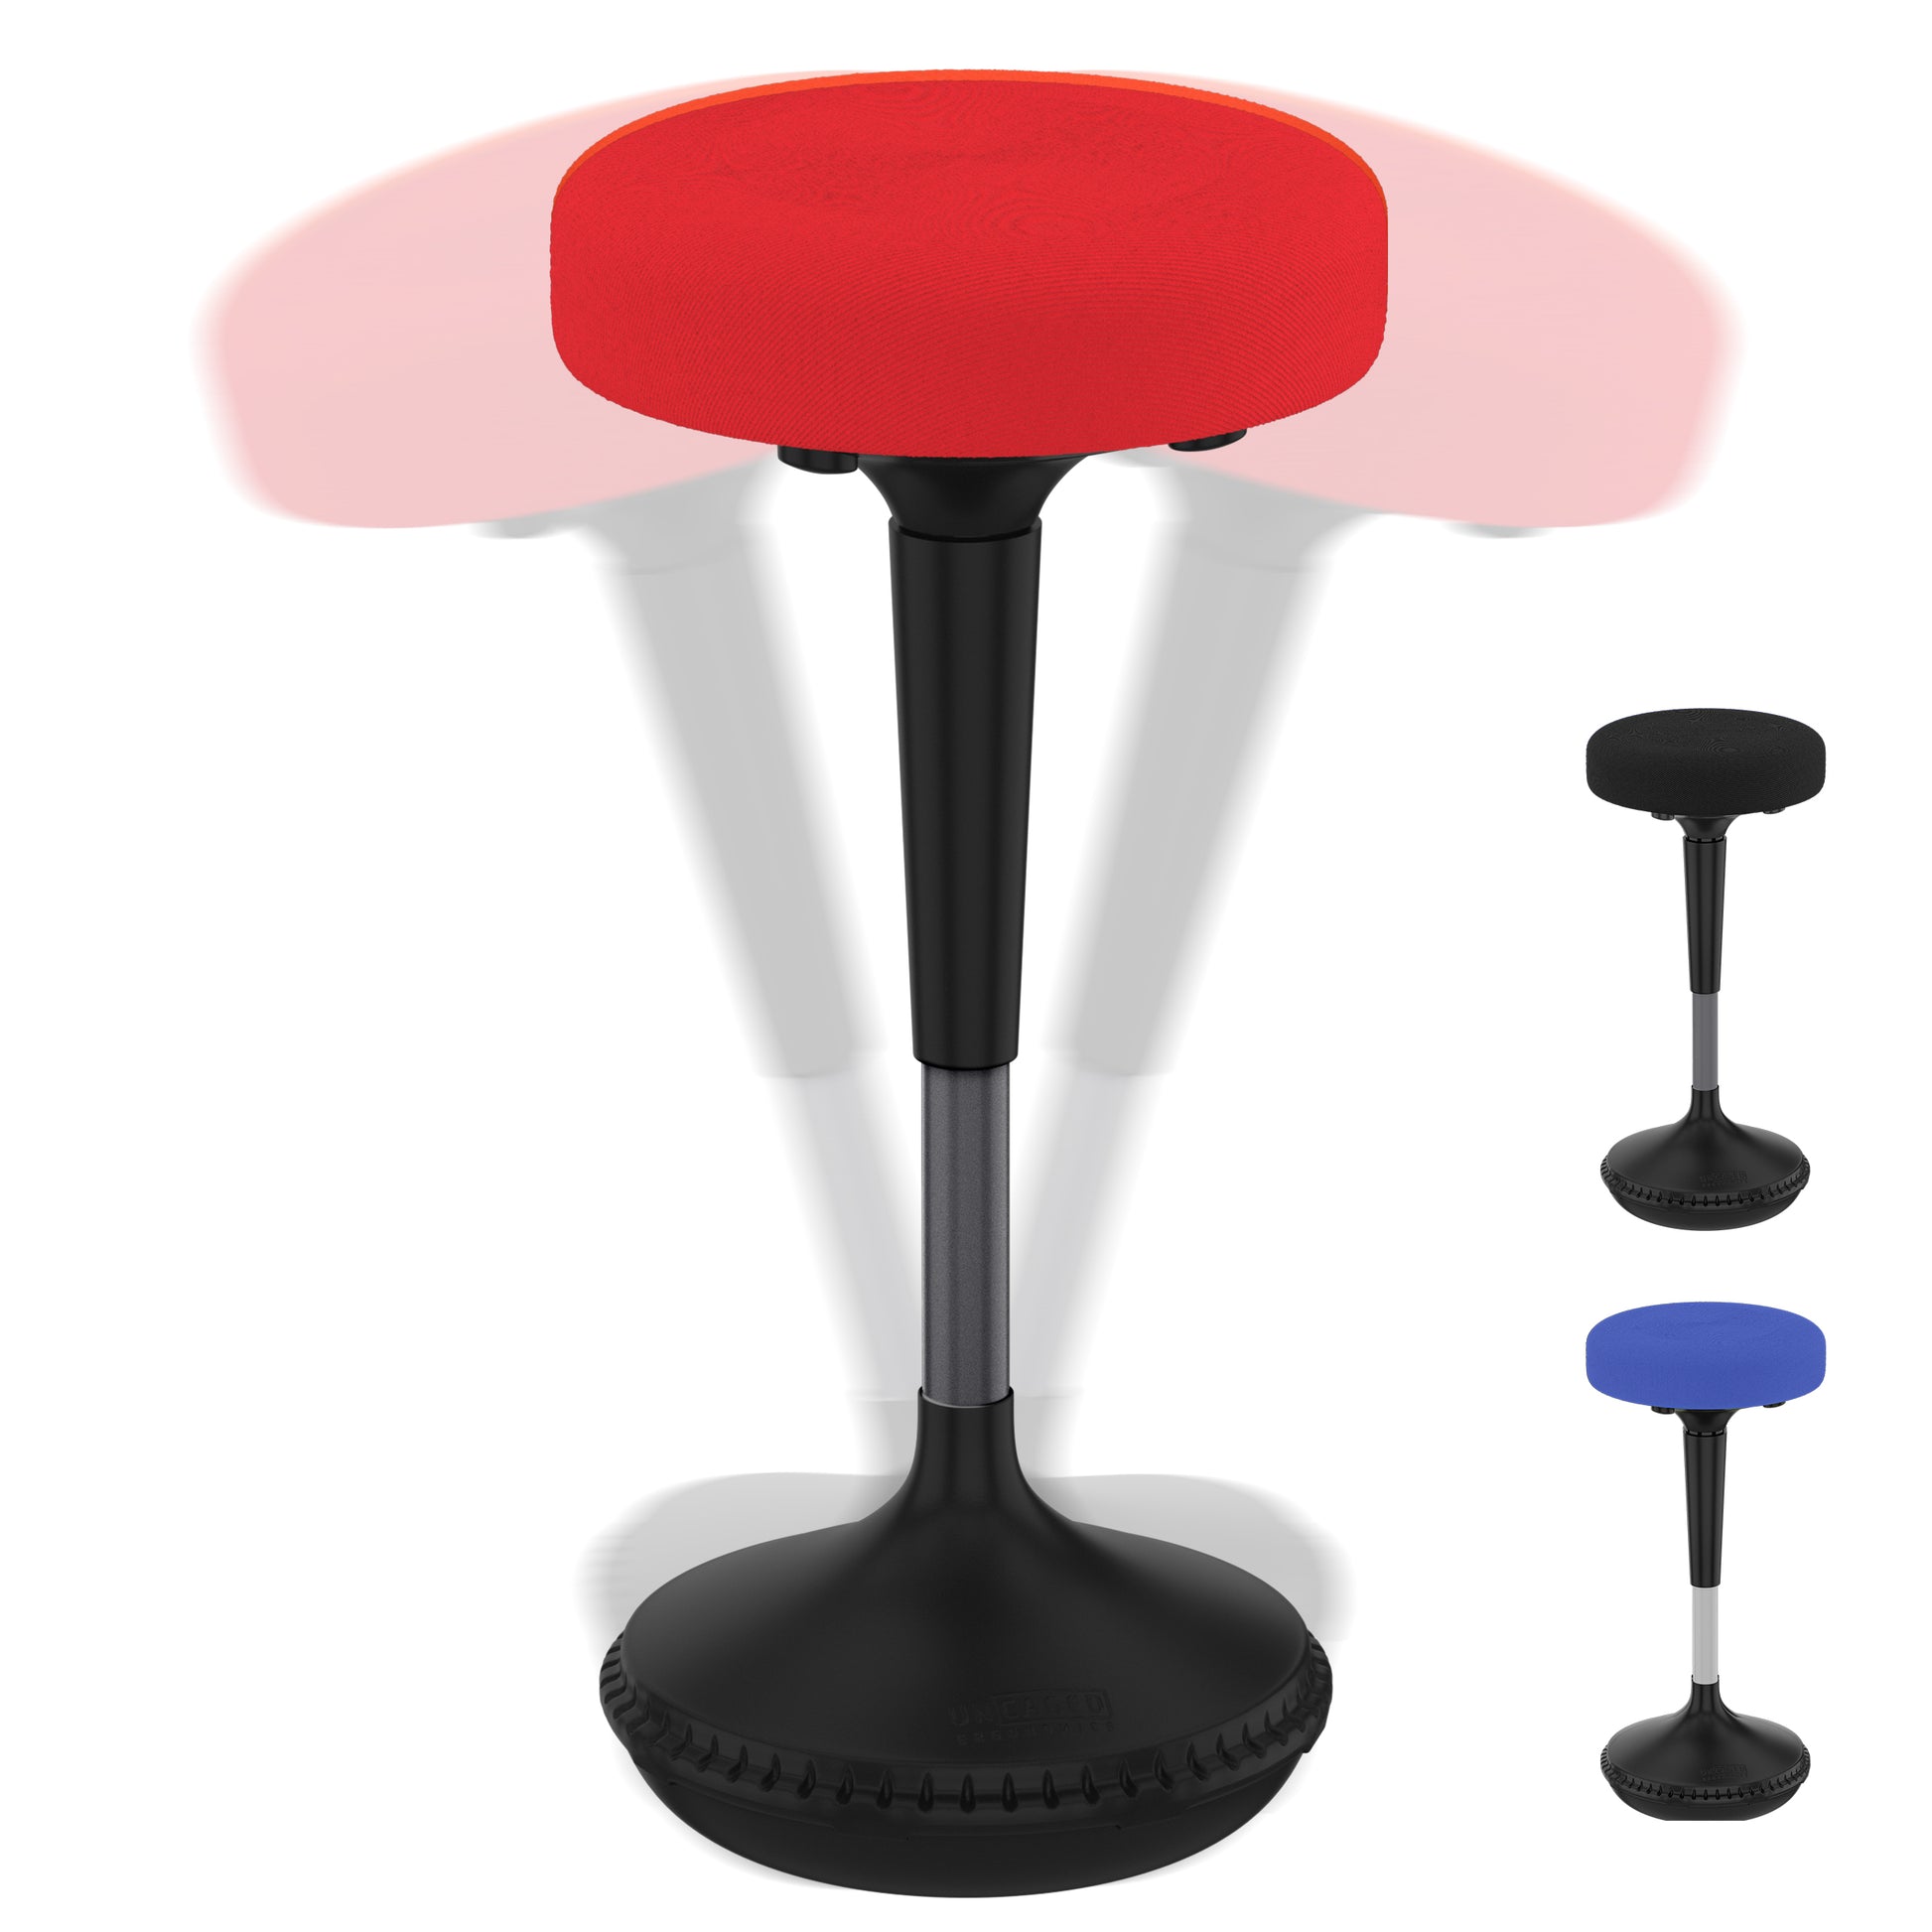 WOBBLE STOOL best standing desk stool tall ergonomic sit stand balance  chair – UncagedErgonomics